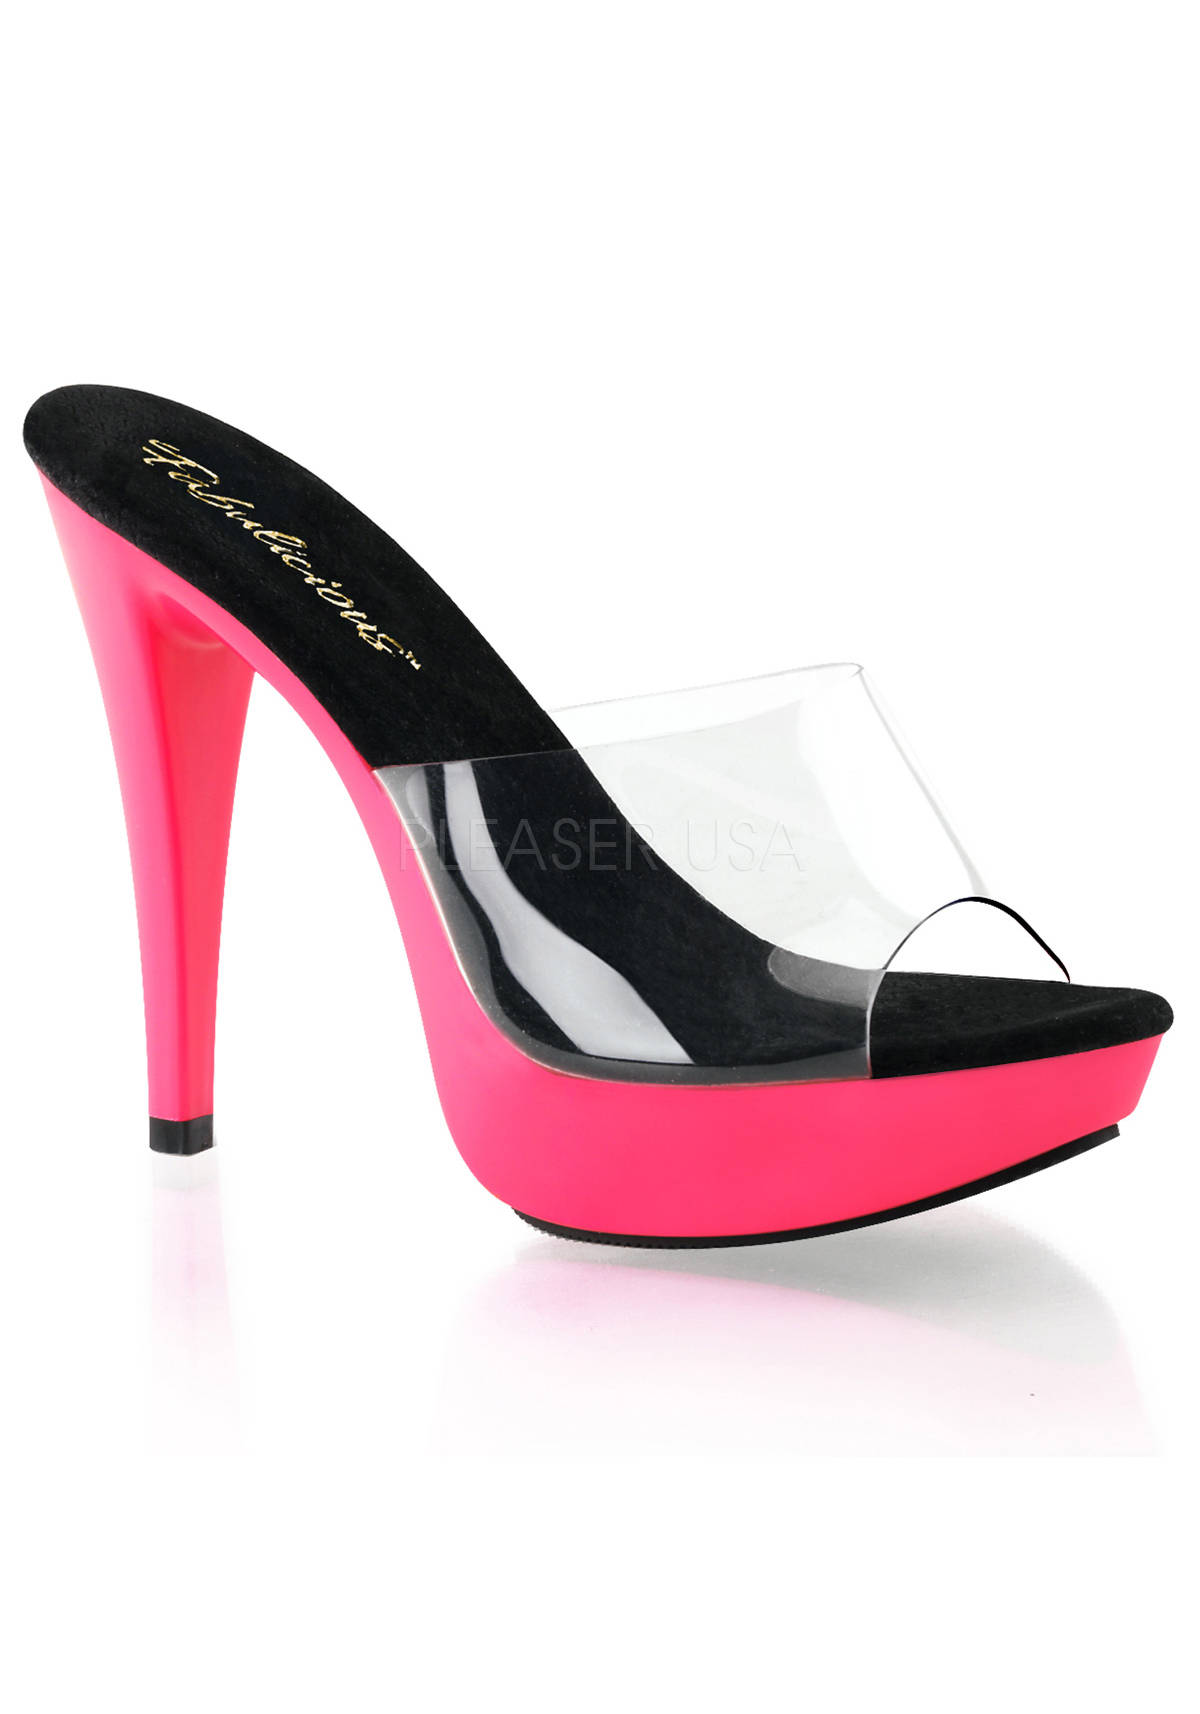 FABULICIOUS 5 Inch Heel, 1 Inch UV Reactive Platform Slide - Clear/Neon Pink